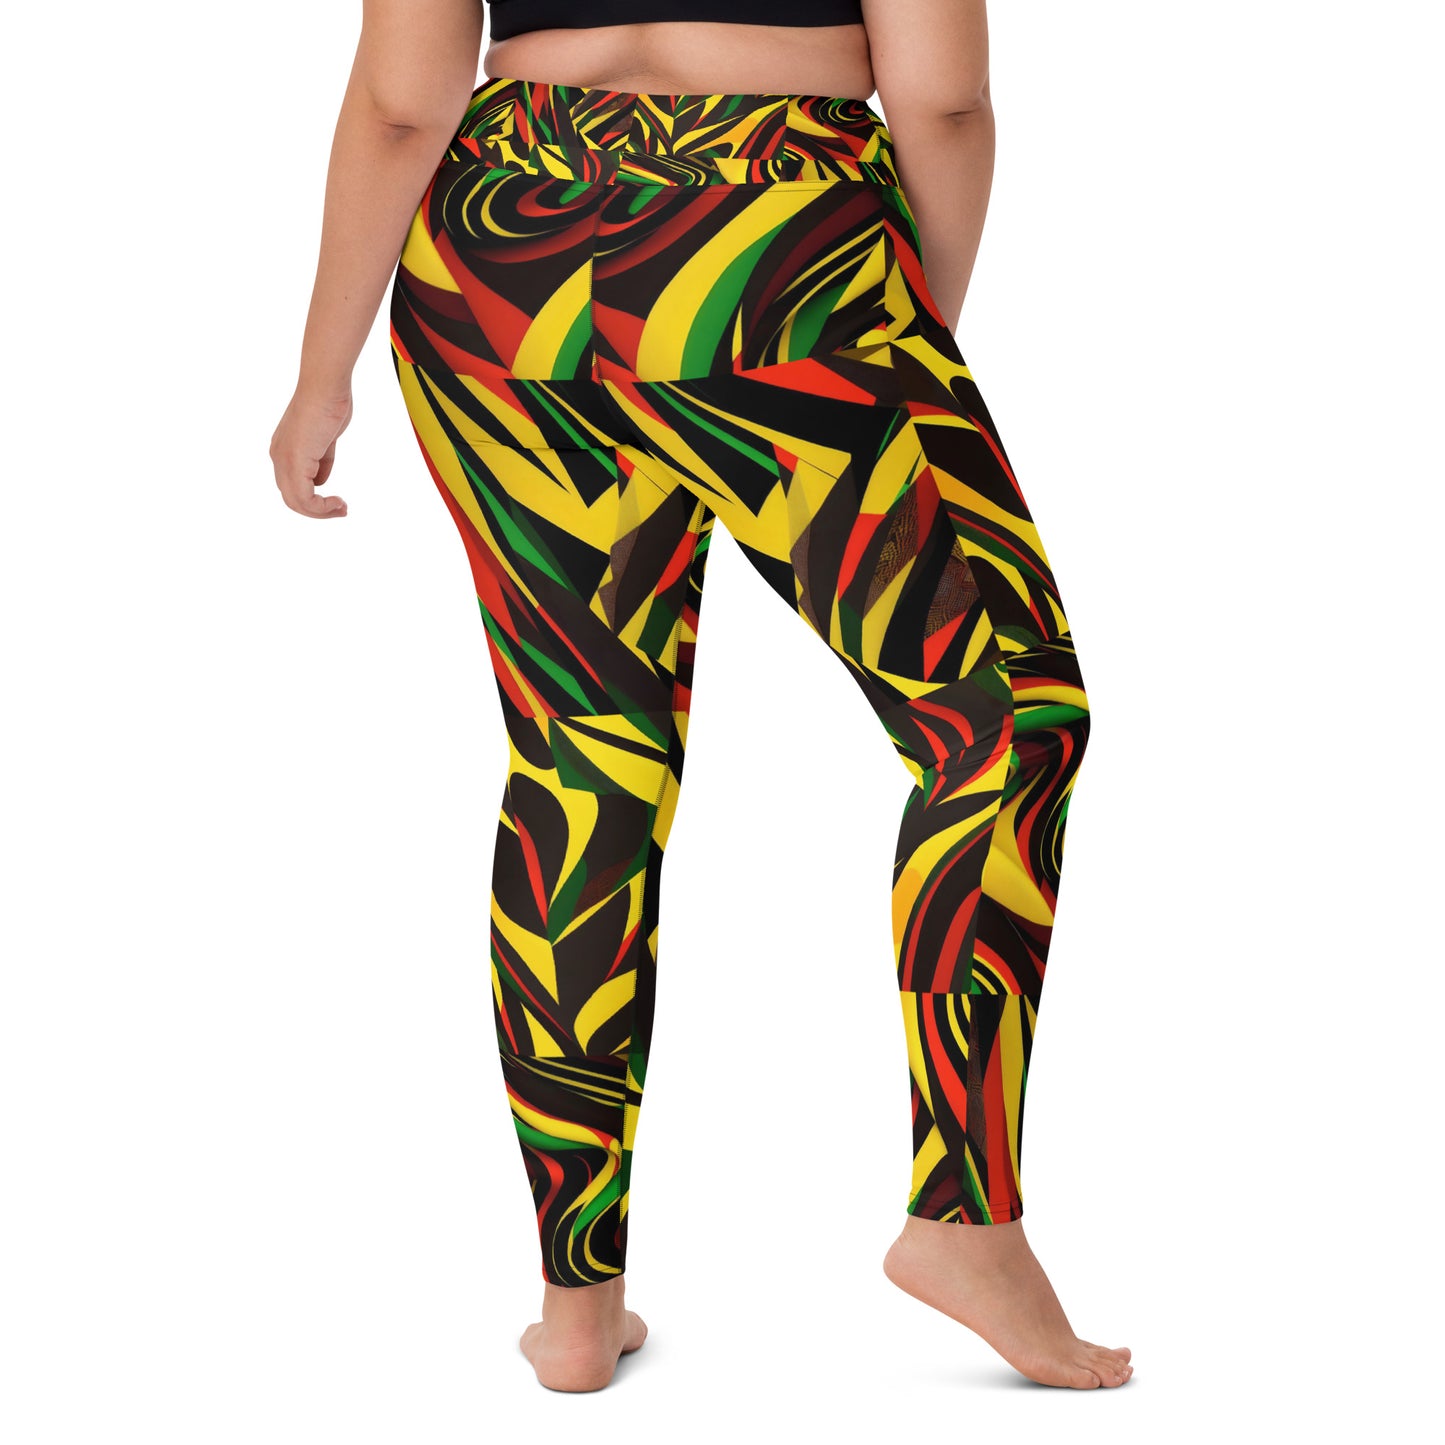 Gorky #DATASS Yoga Pants - Jungle Fever